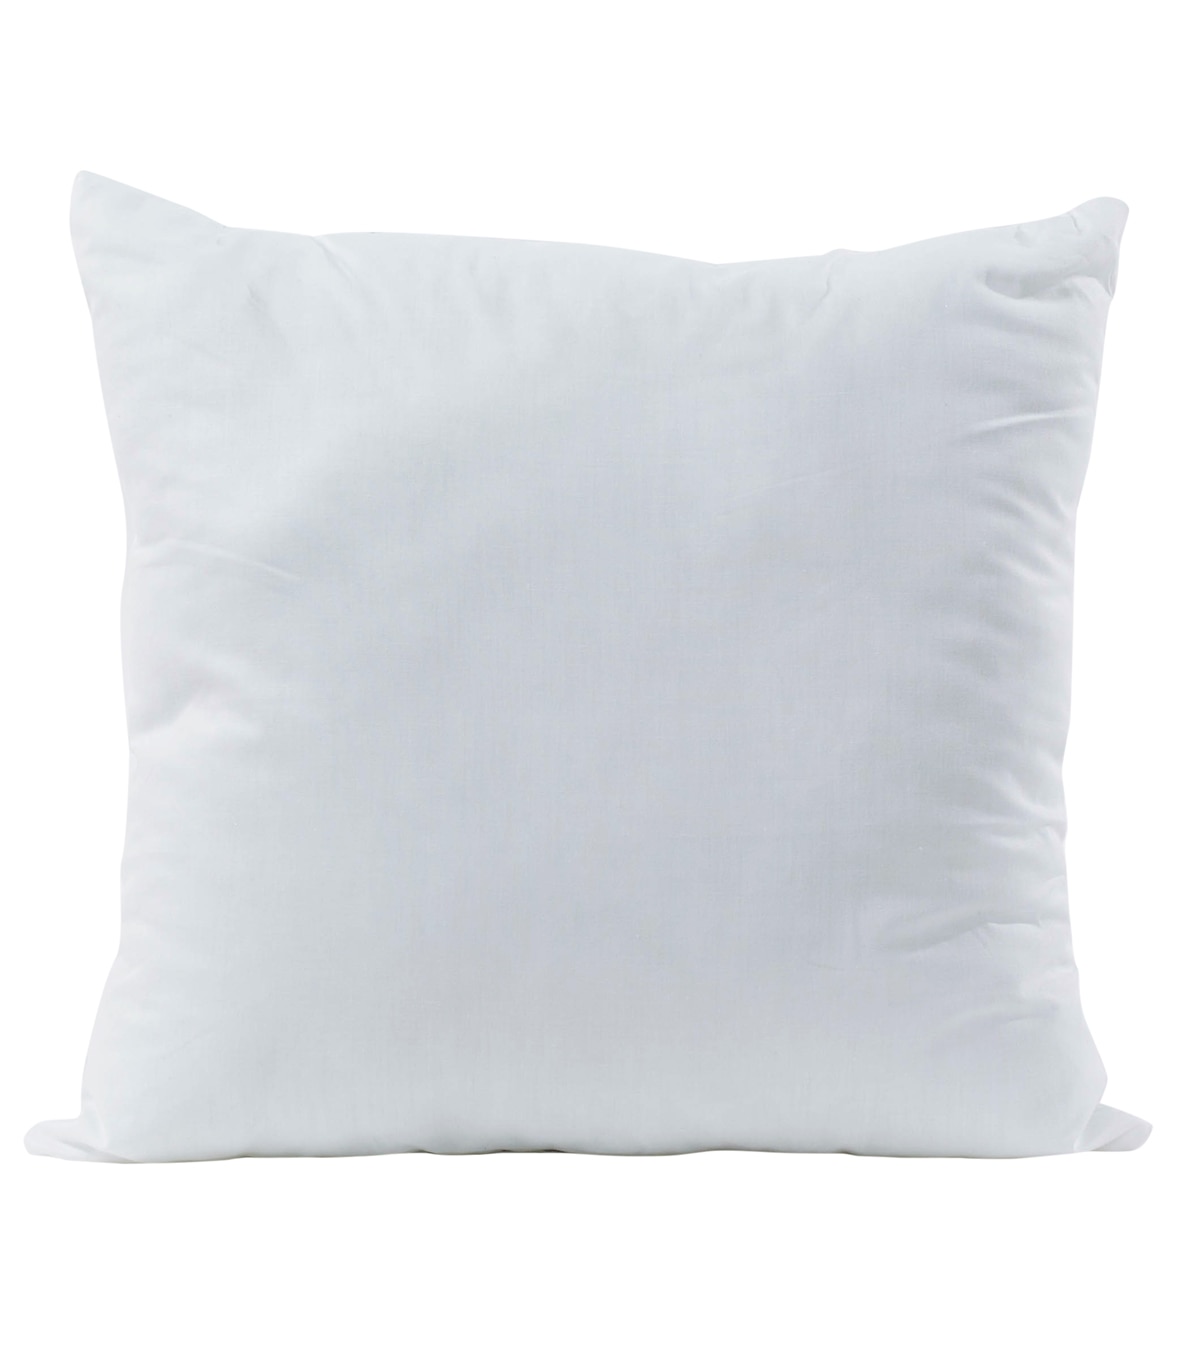 Soft n Crafty Premier pillow form 12